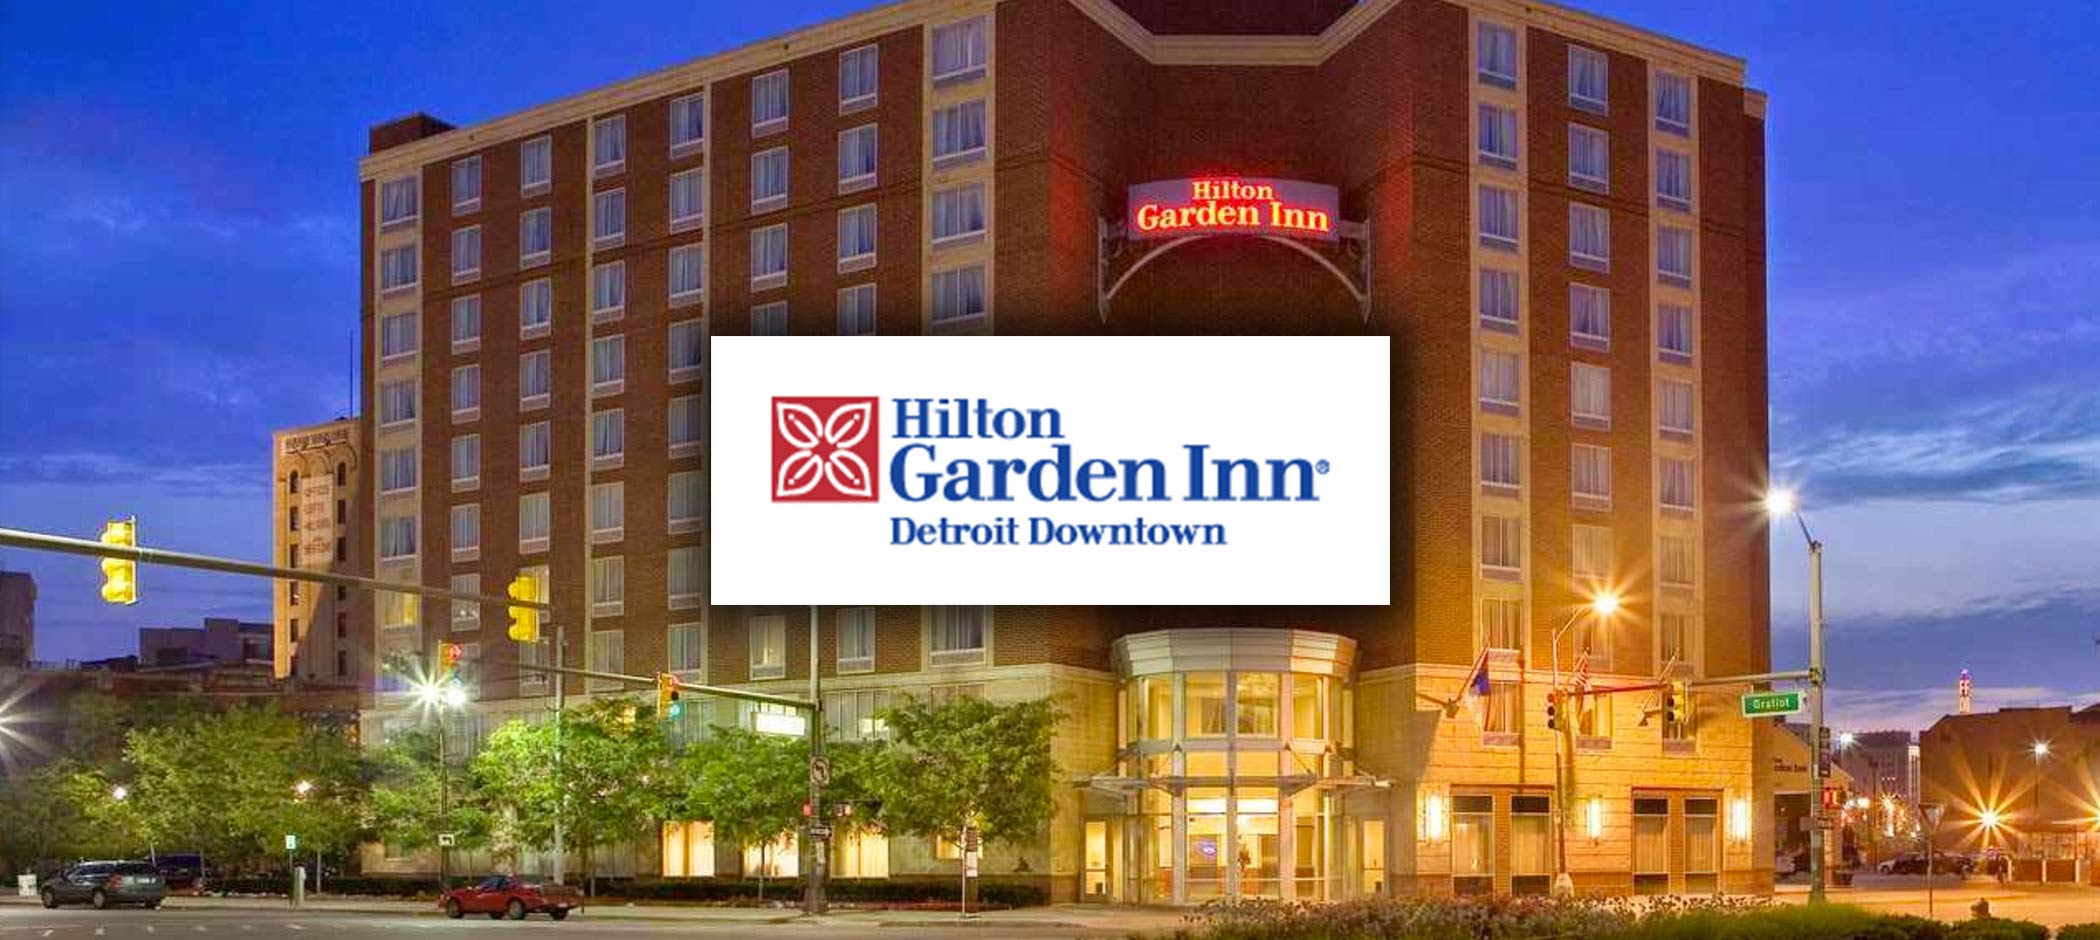 Hilton Garden Inn Detroit Downtown Hotel Visitdetroit Com